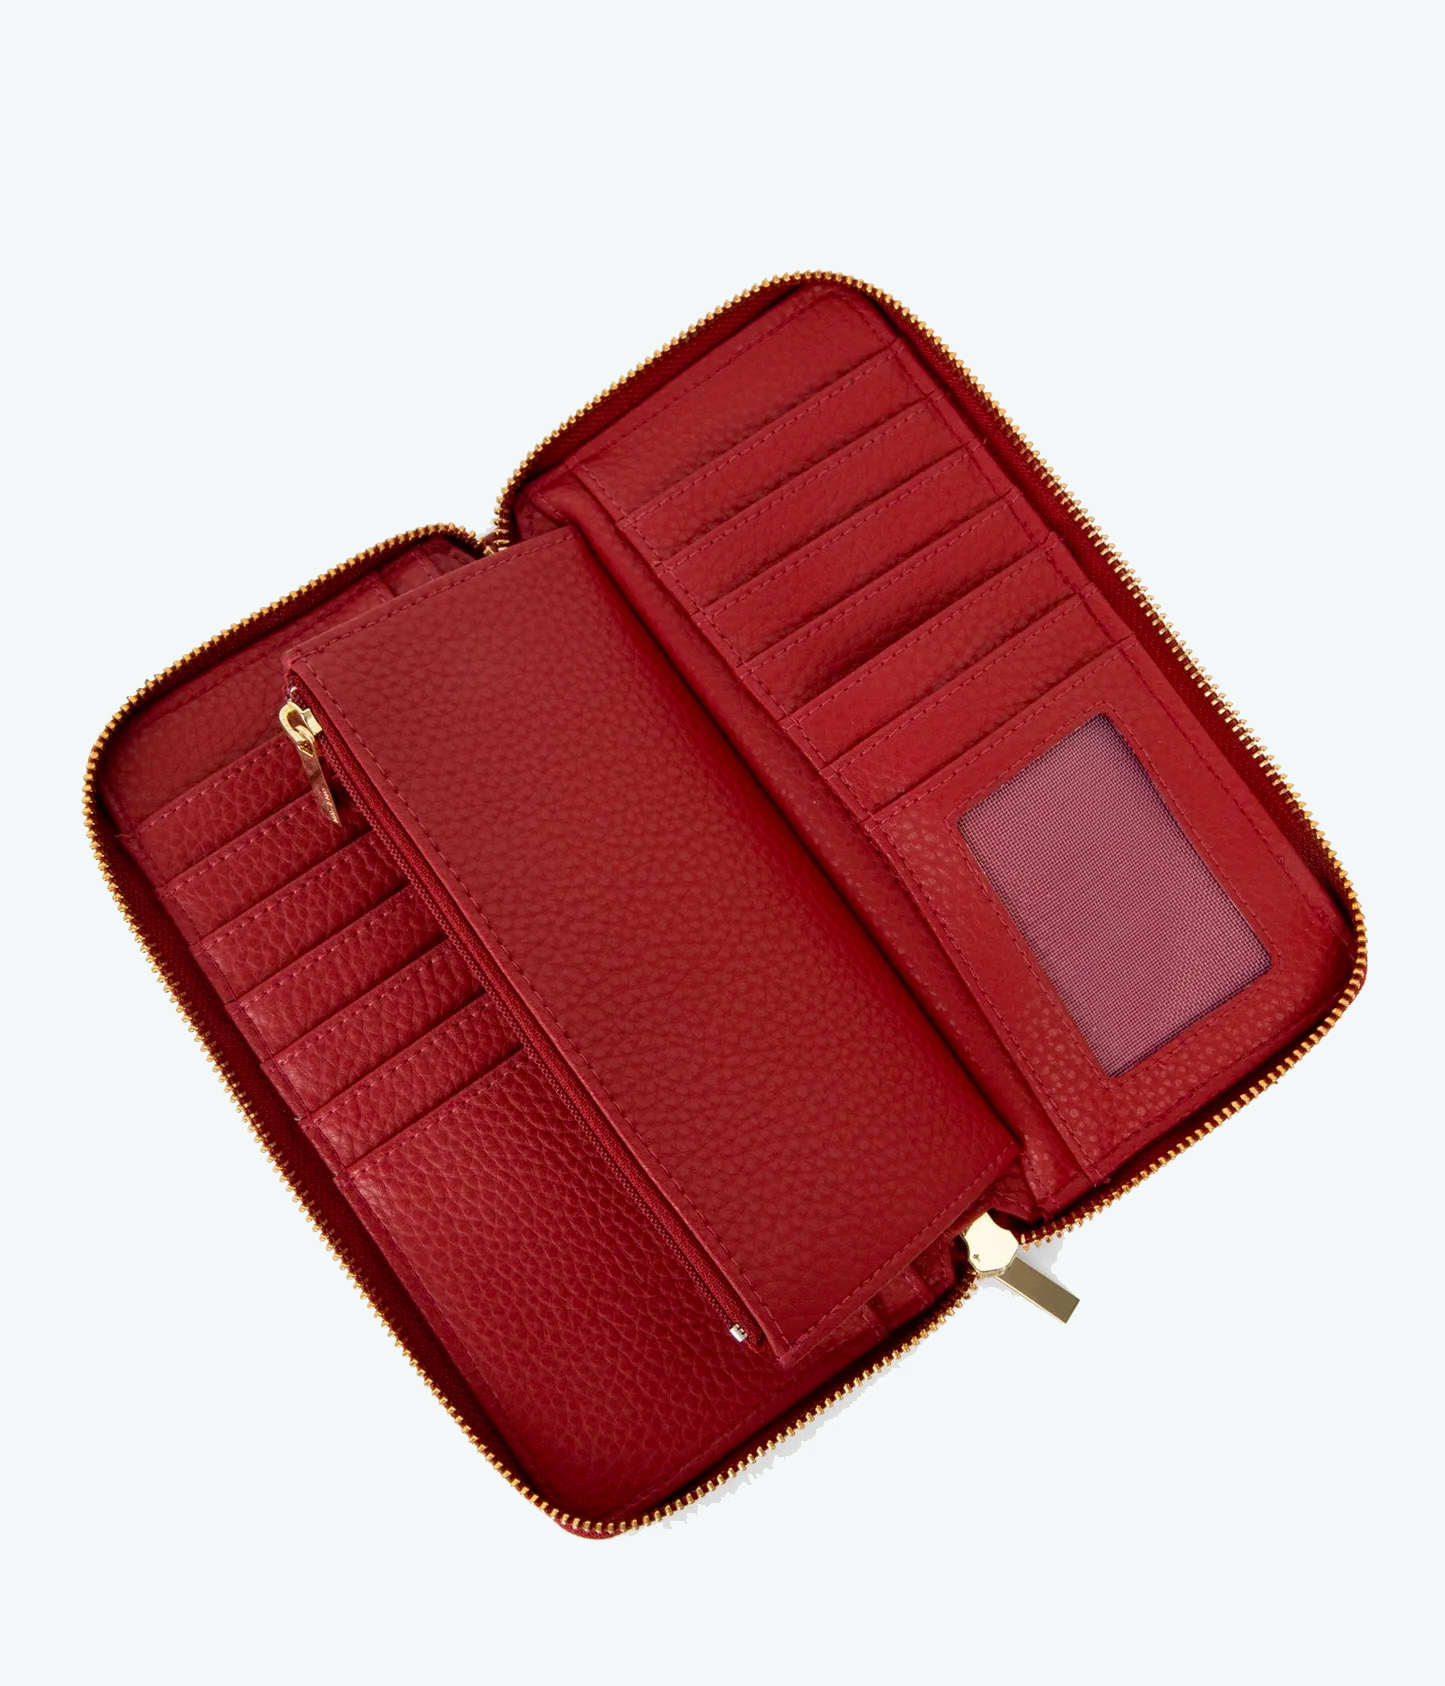 An open red wallet. 